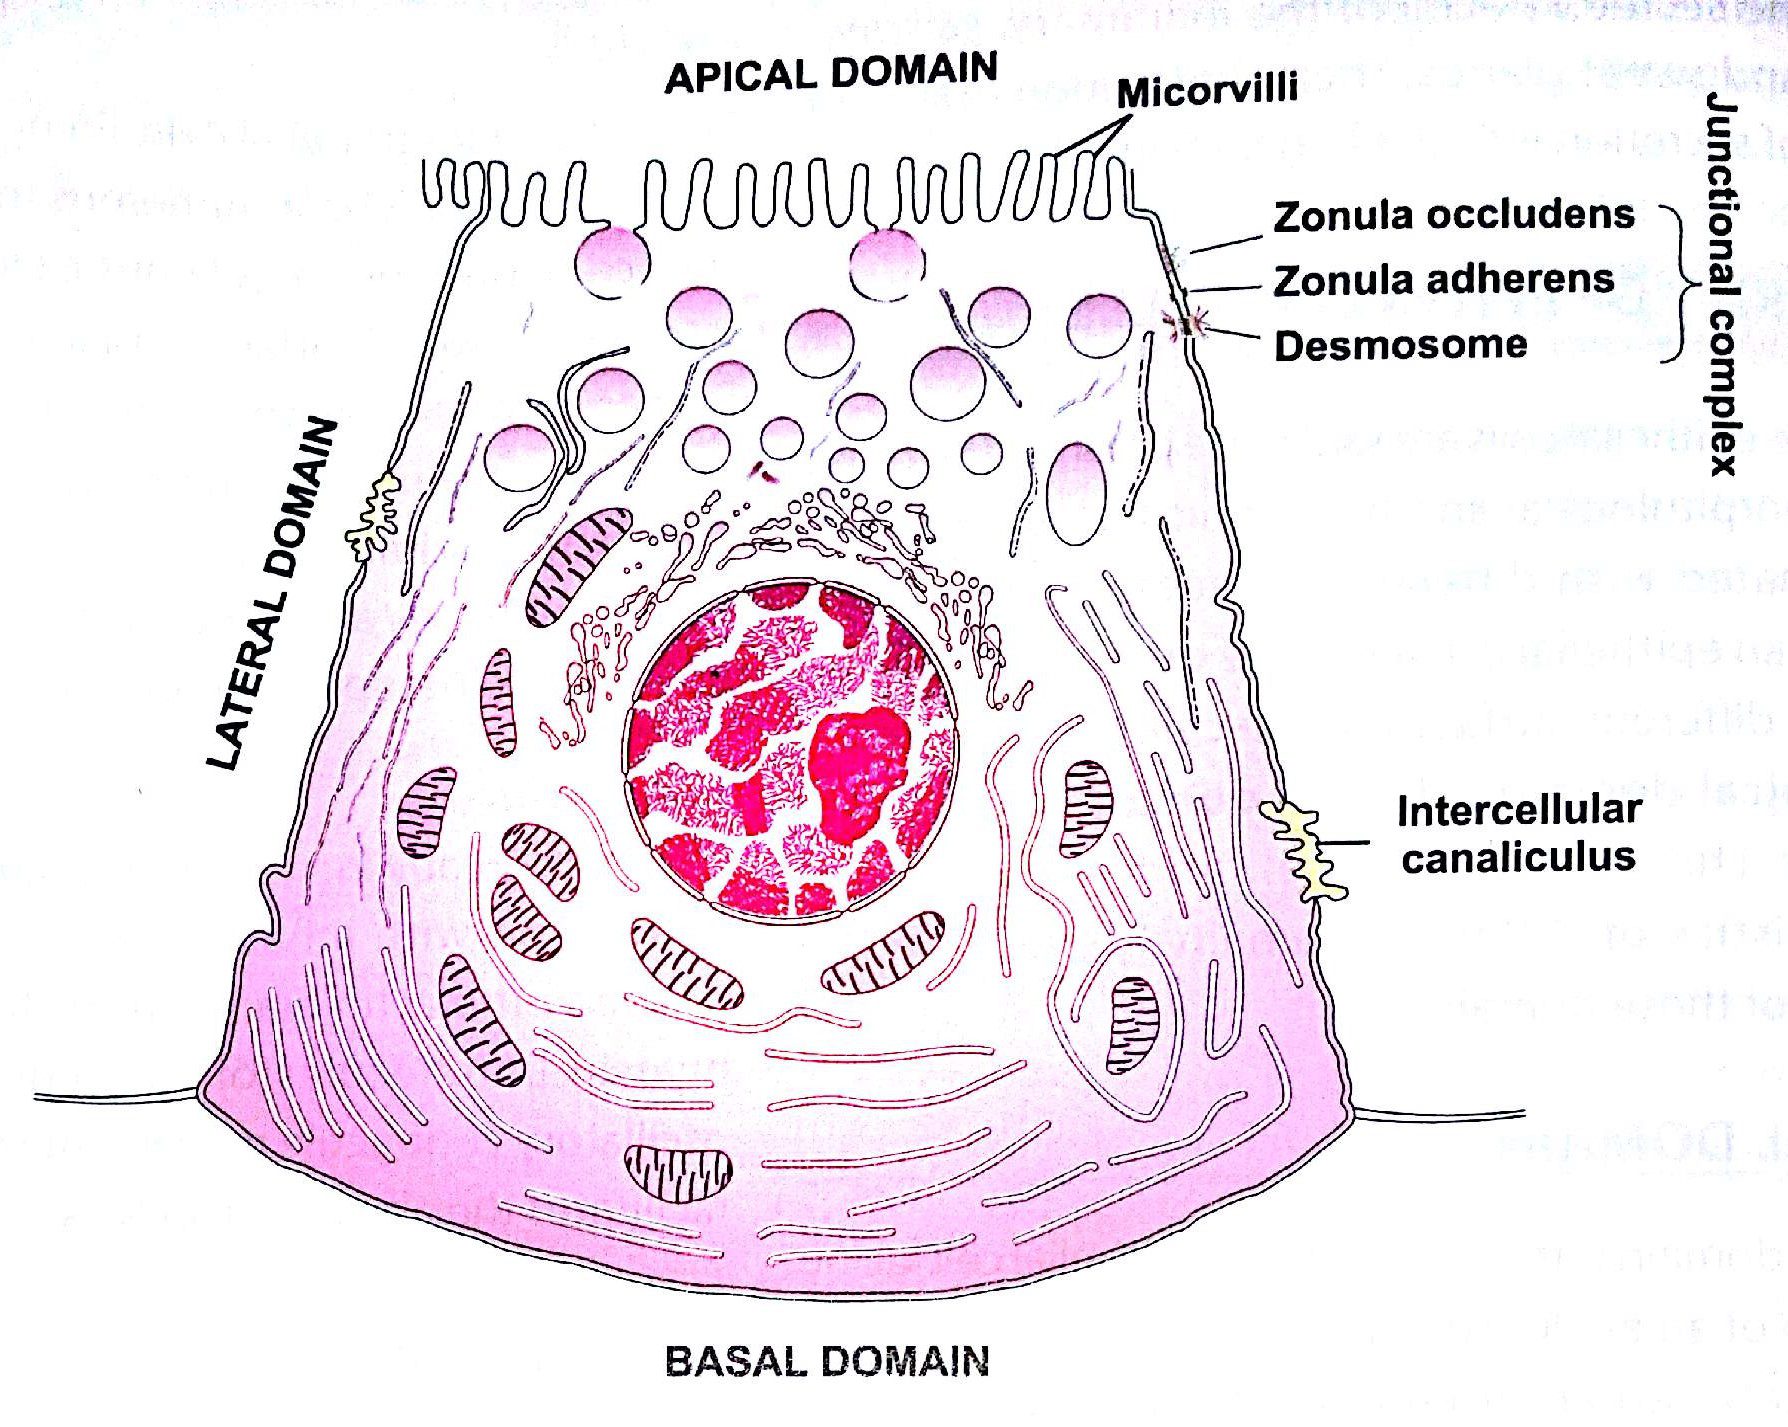 Polarity of epithelial cells